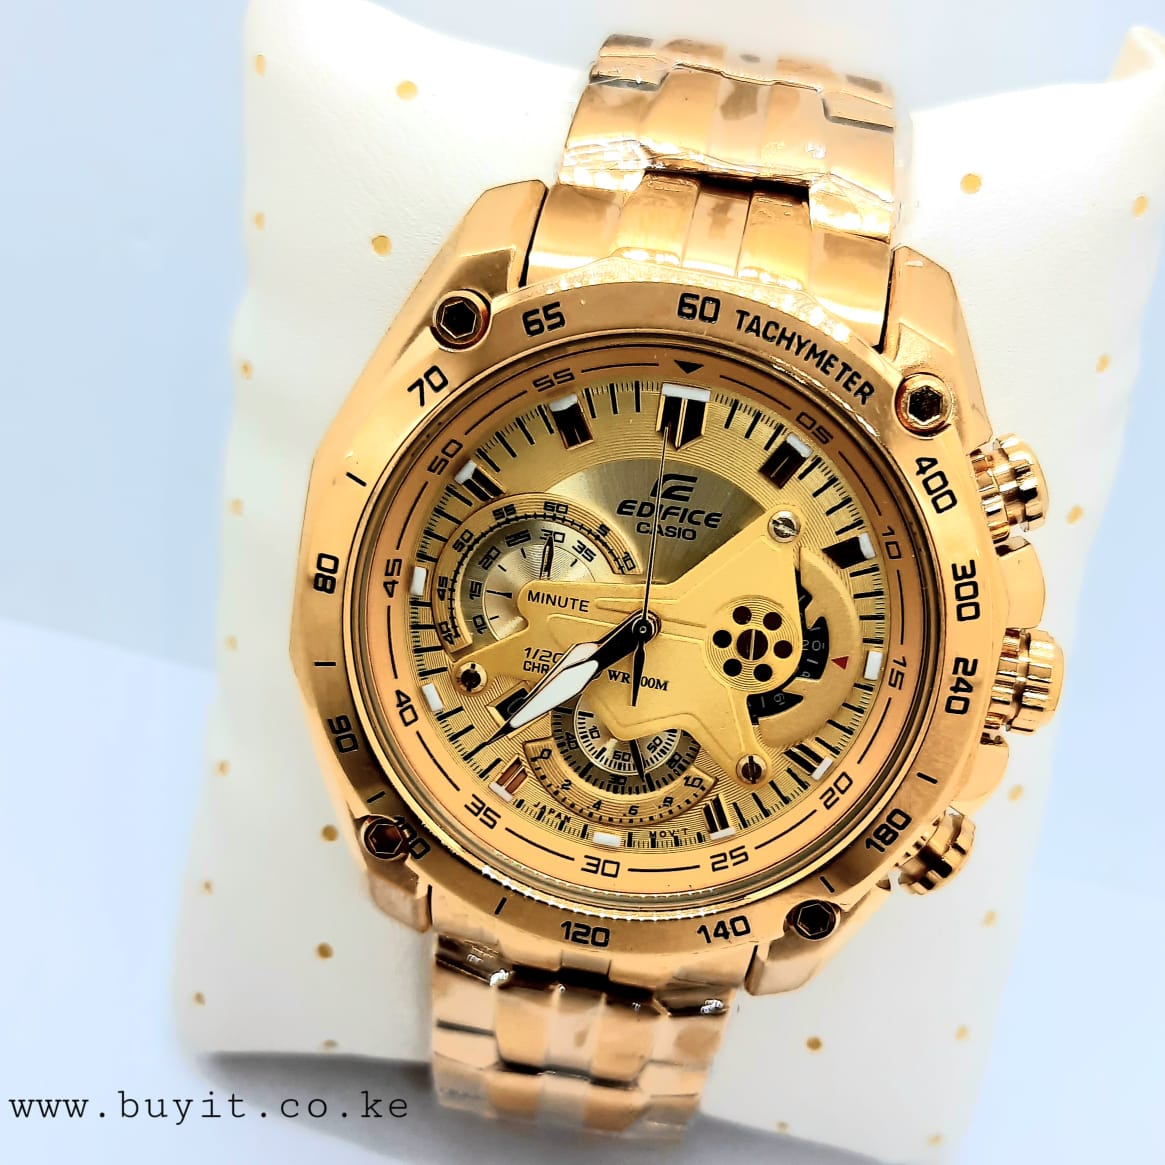 Golden Casio Edifice Chronograph Timepiece